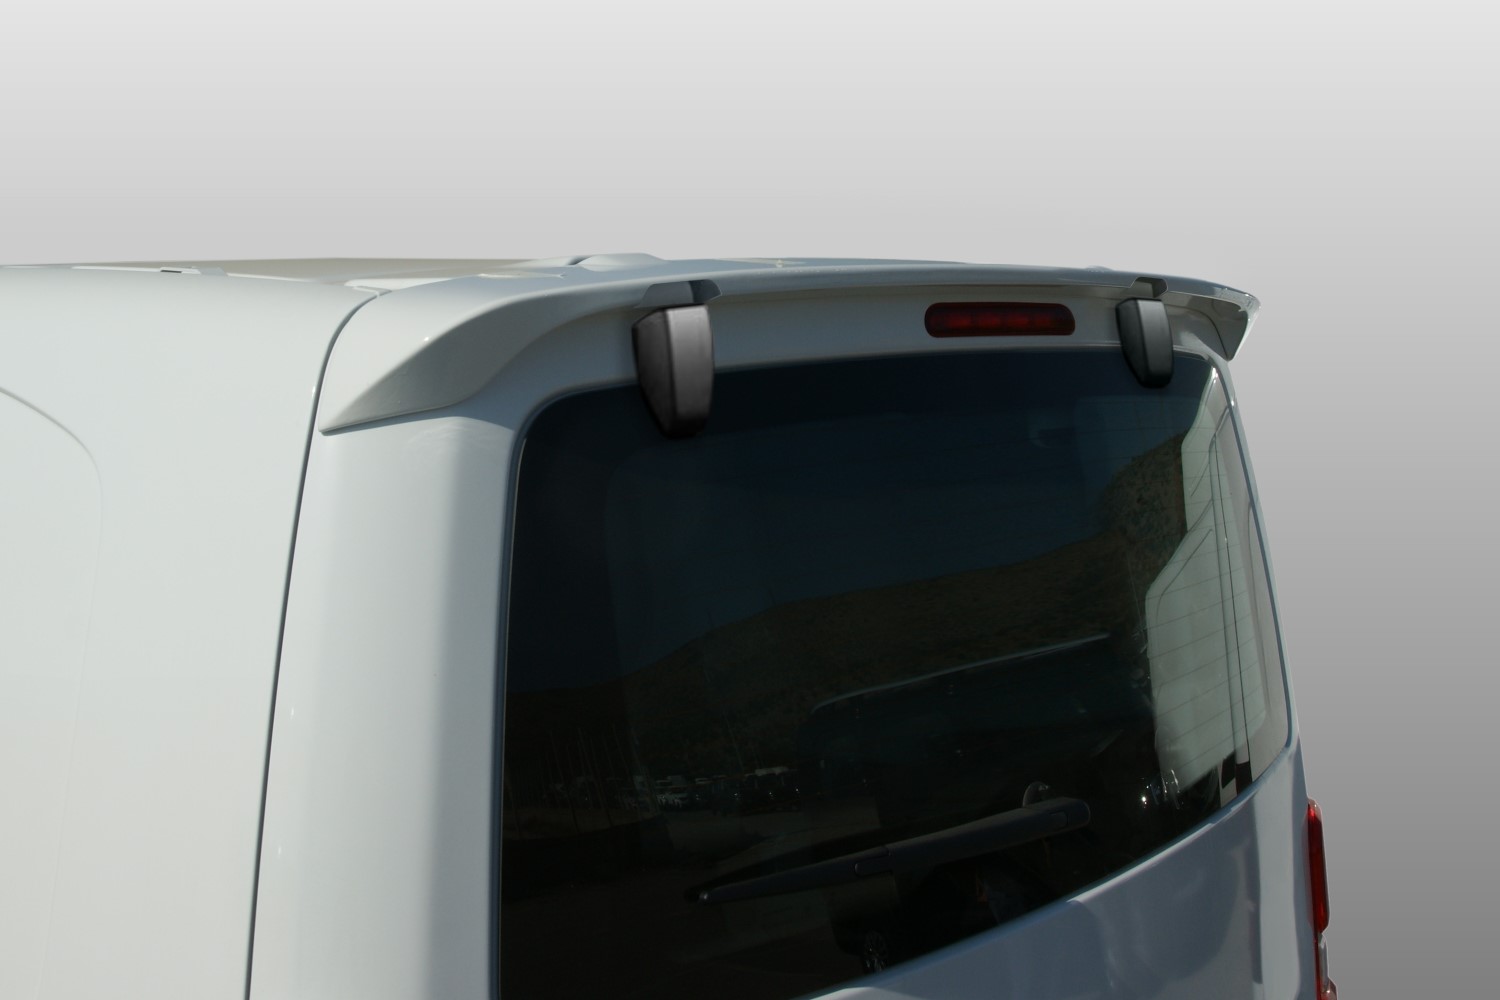 Kofferraumwanne passend für Citroen Spacetourer XL/Opel Zafira Life  L/Peugeot Traveller L3/Toyota Proace Verso L2 ab 2016 (rutschhemmend)